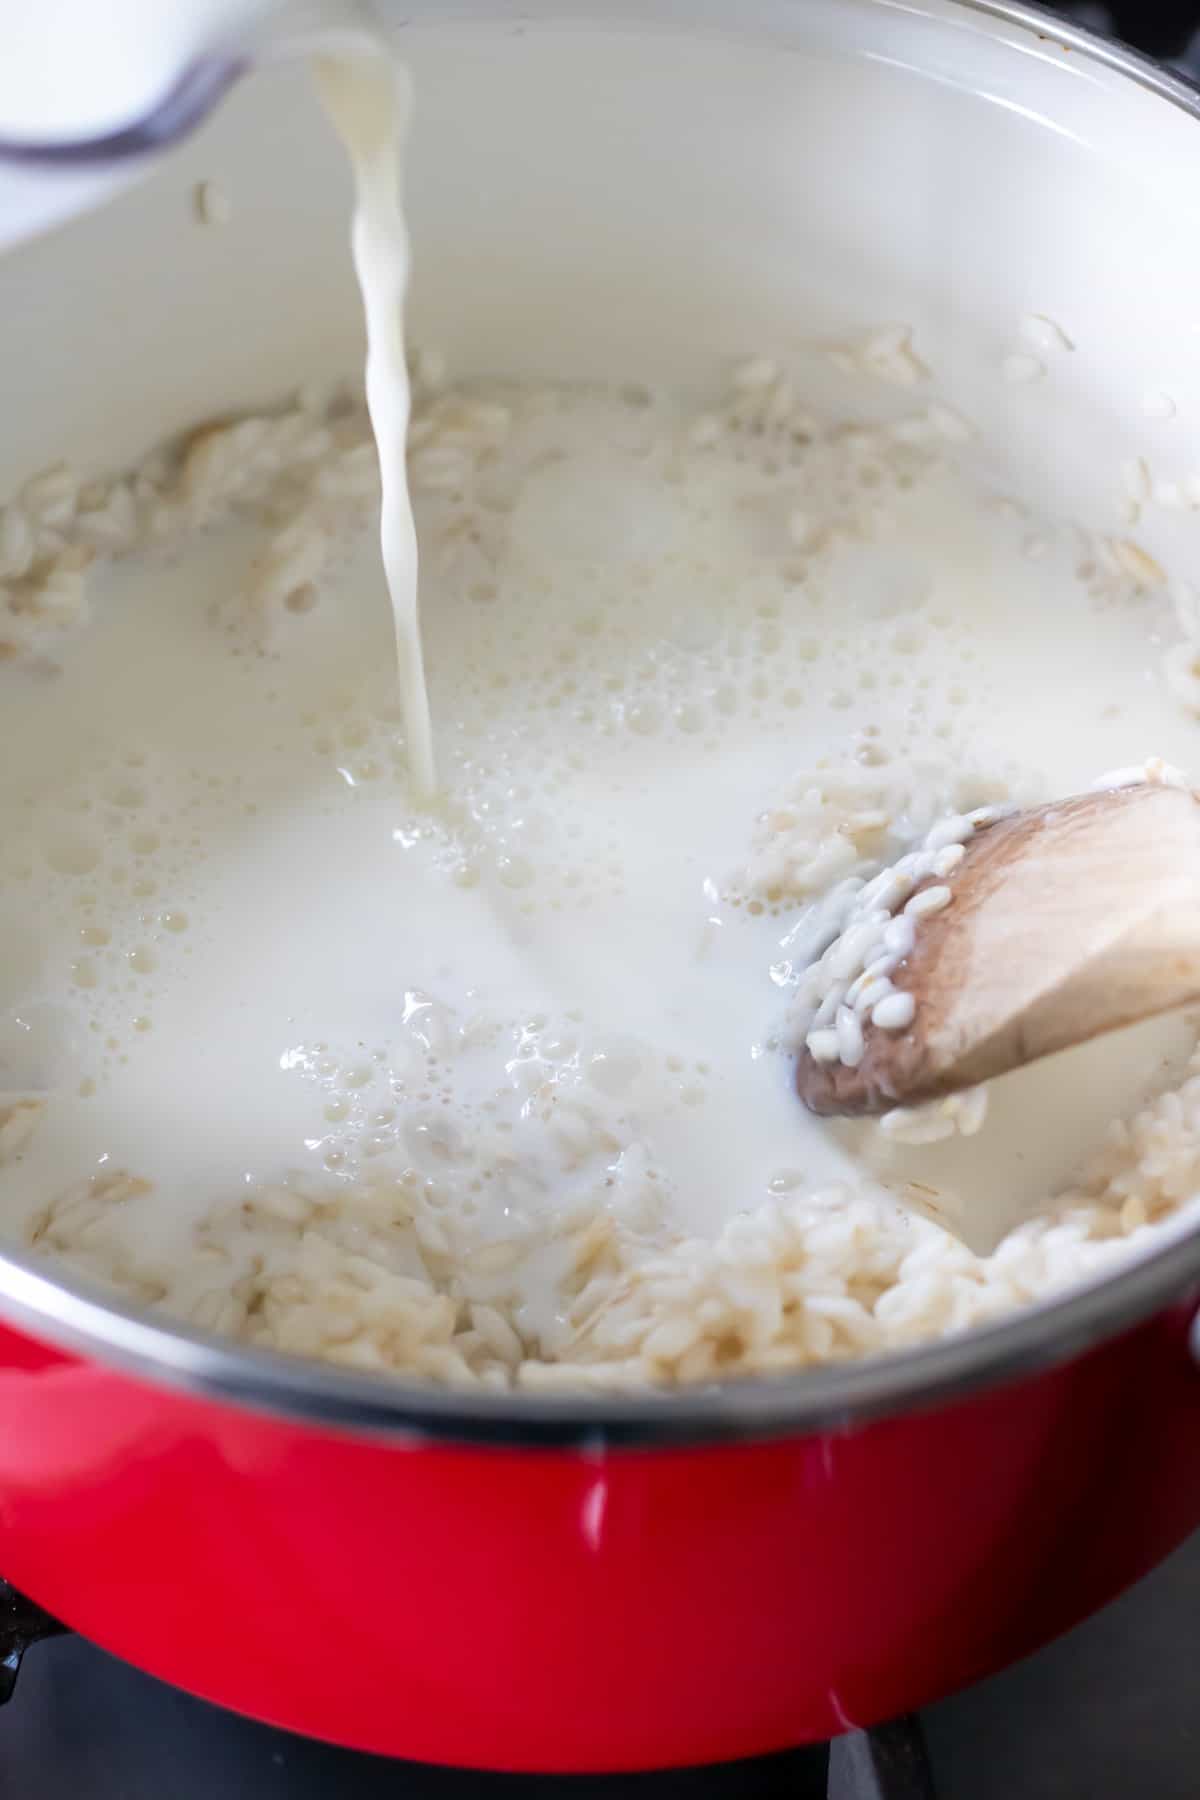 Adding milk to the pot of rice.